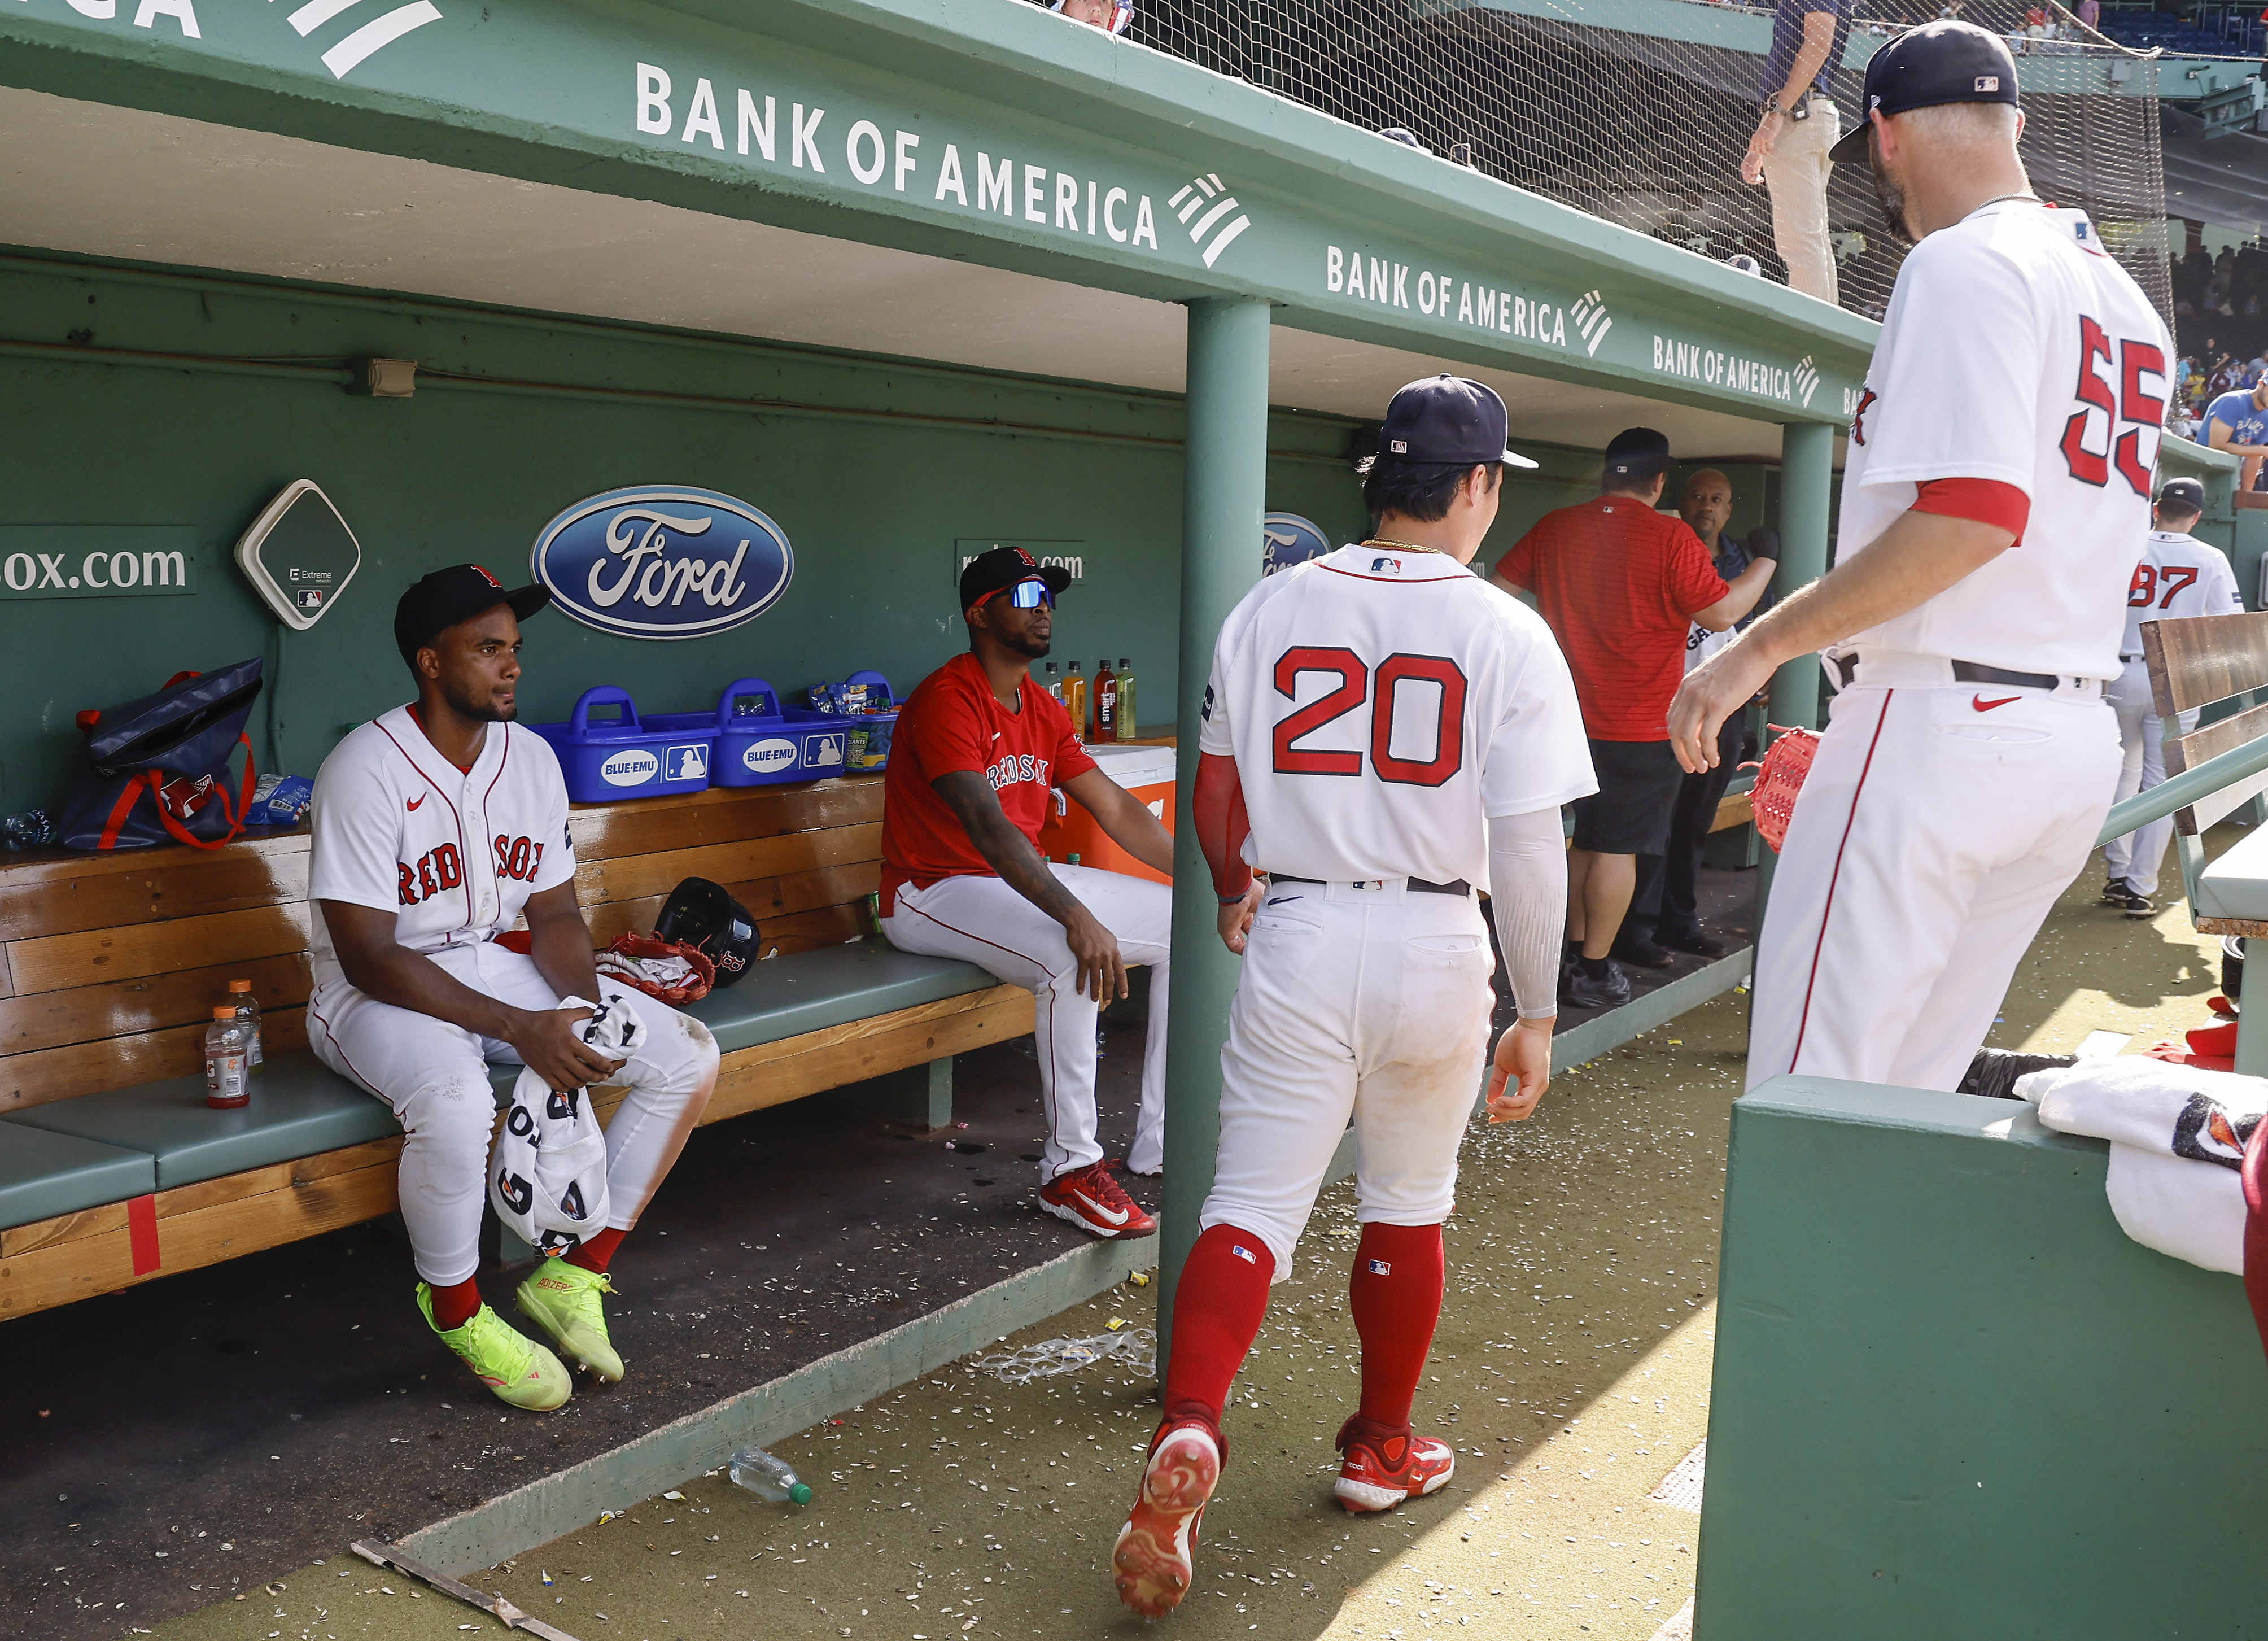 Red Sox' 'beard bonding' symbolic of attitude adjustment - The Boston Globe